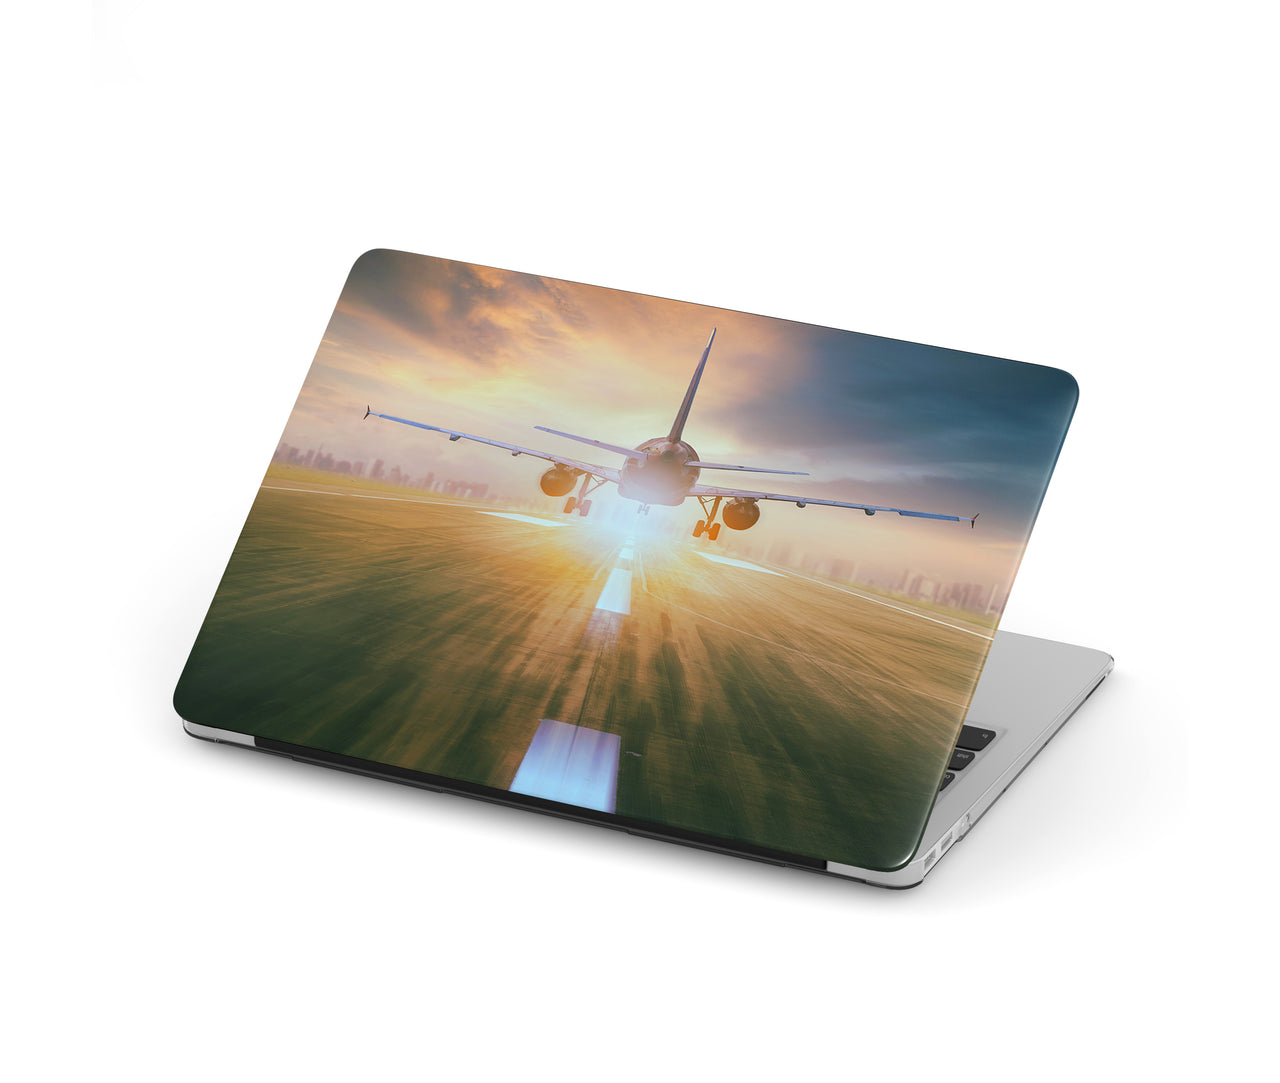 Airplane Flying Over Runway Designed Macbook Cases